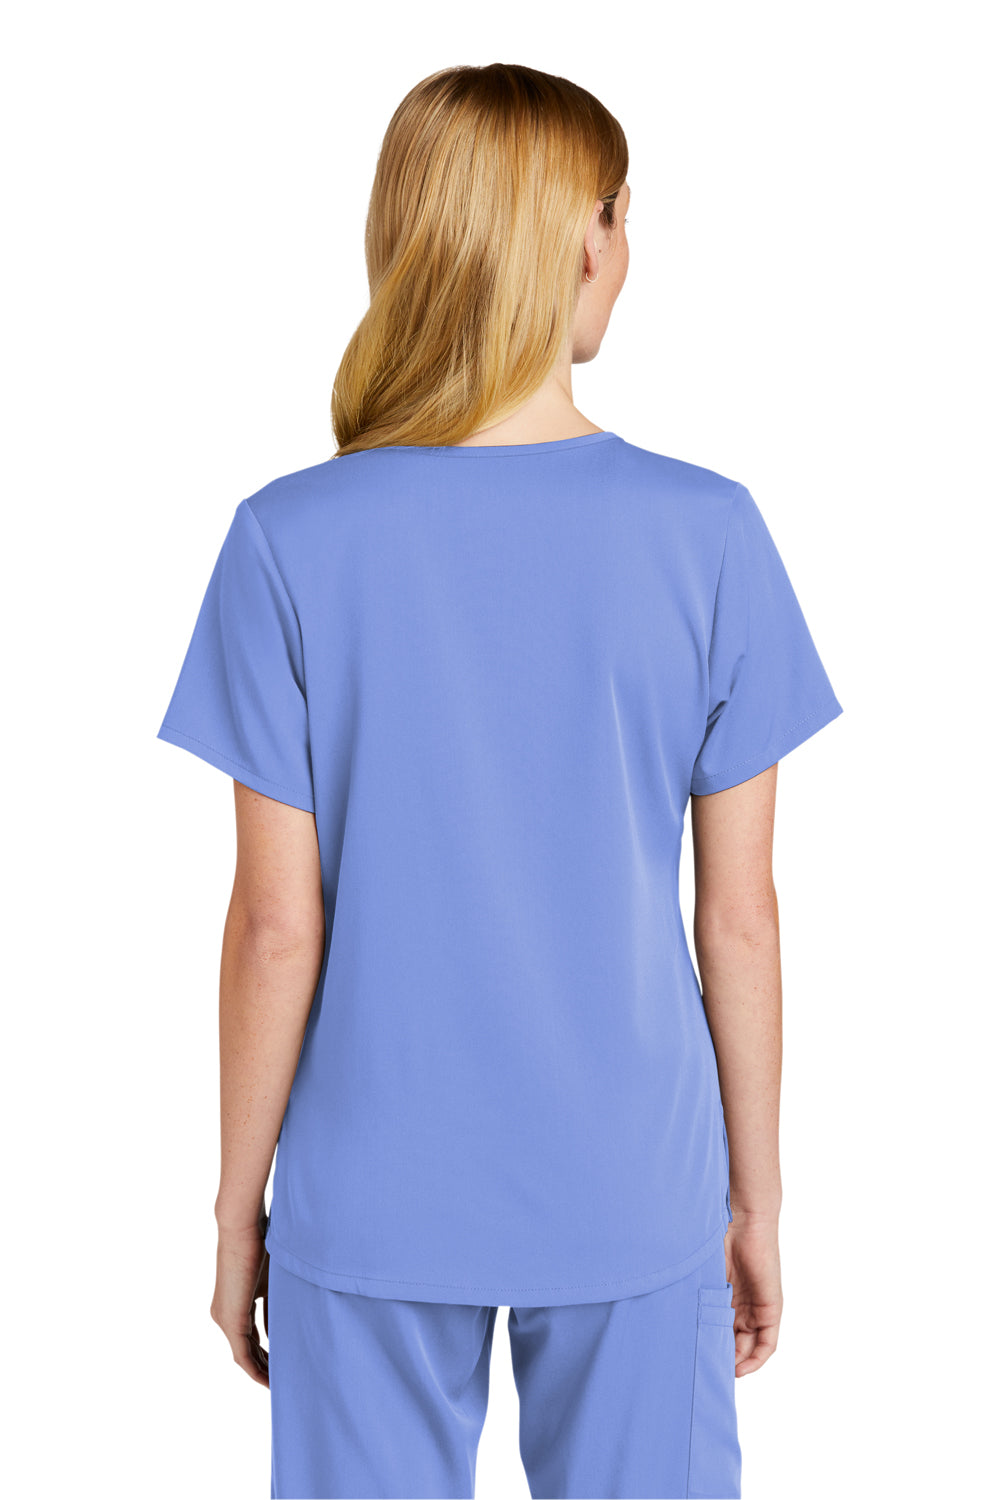 Wonderwink WW4268 Premiere Flex Short Sleeve V-Neck Mock Wrap Shirt Ceil Blue Back